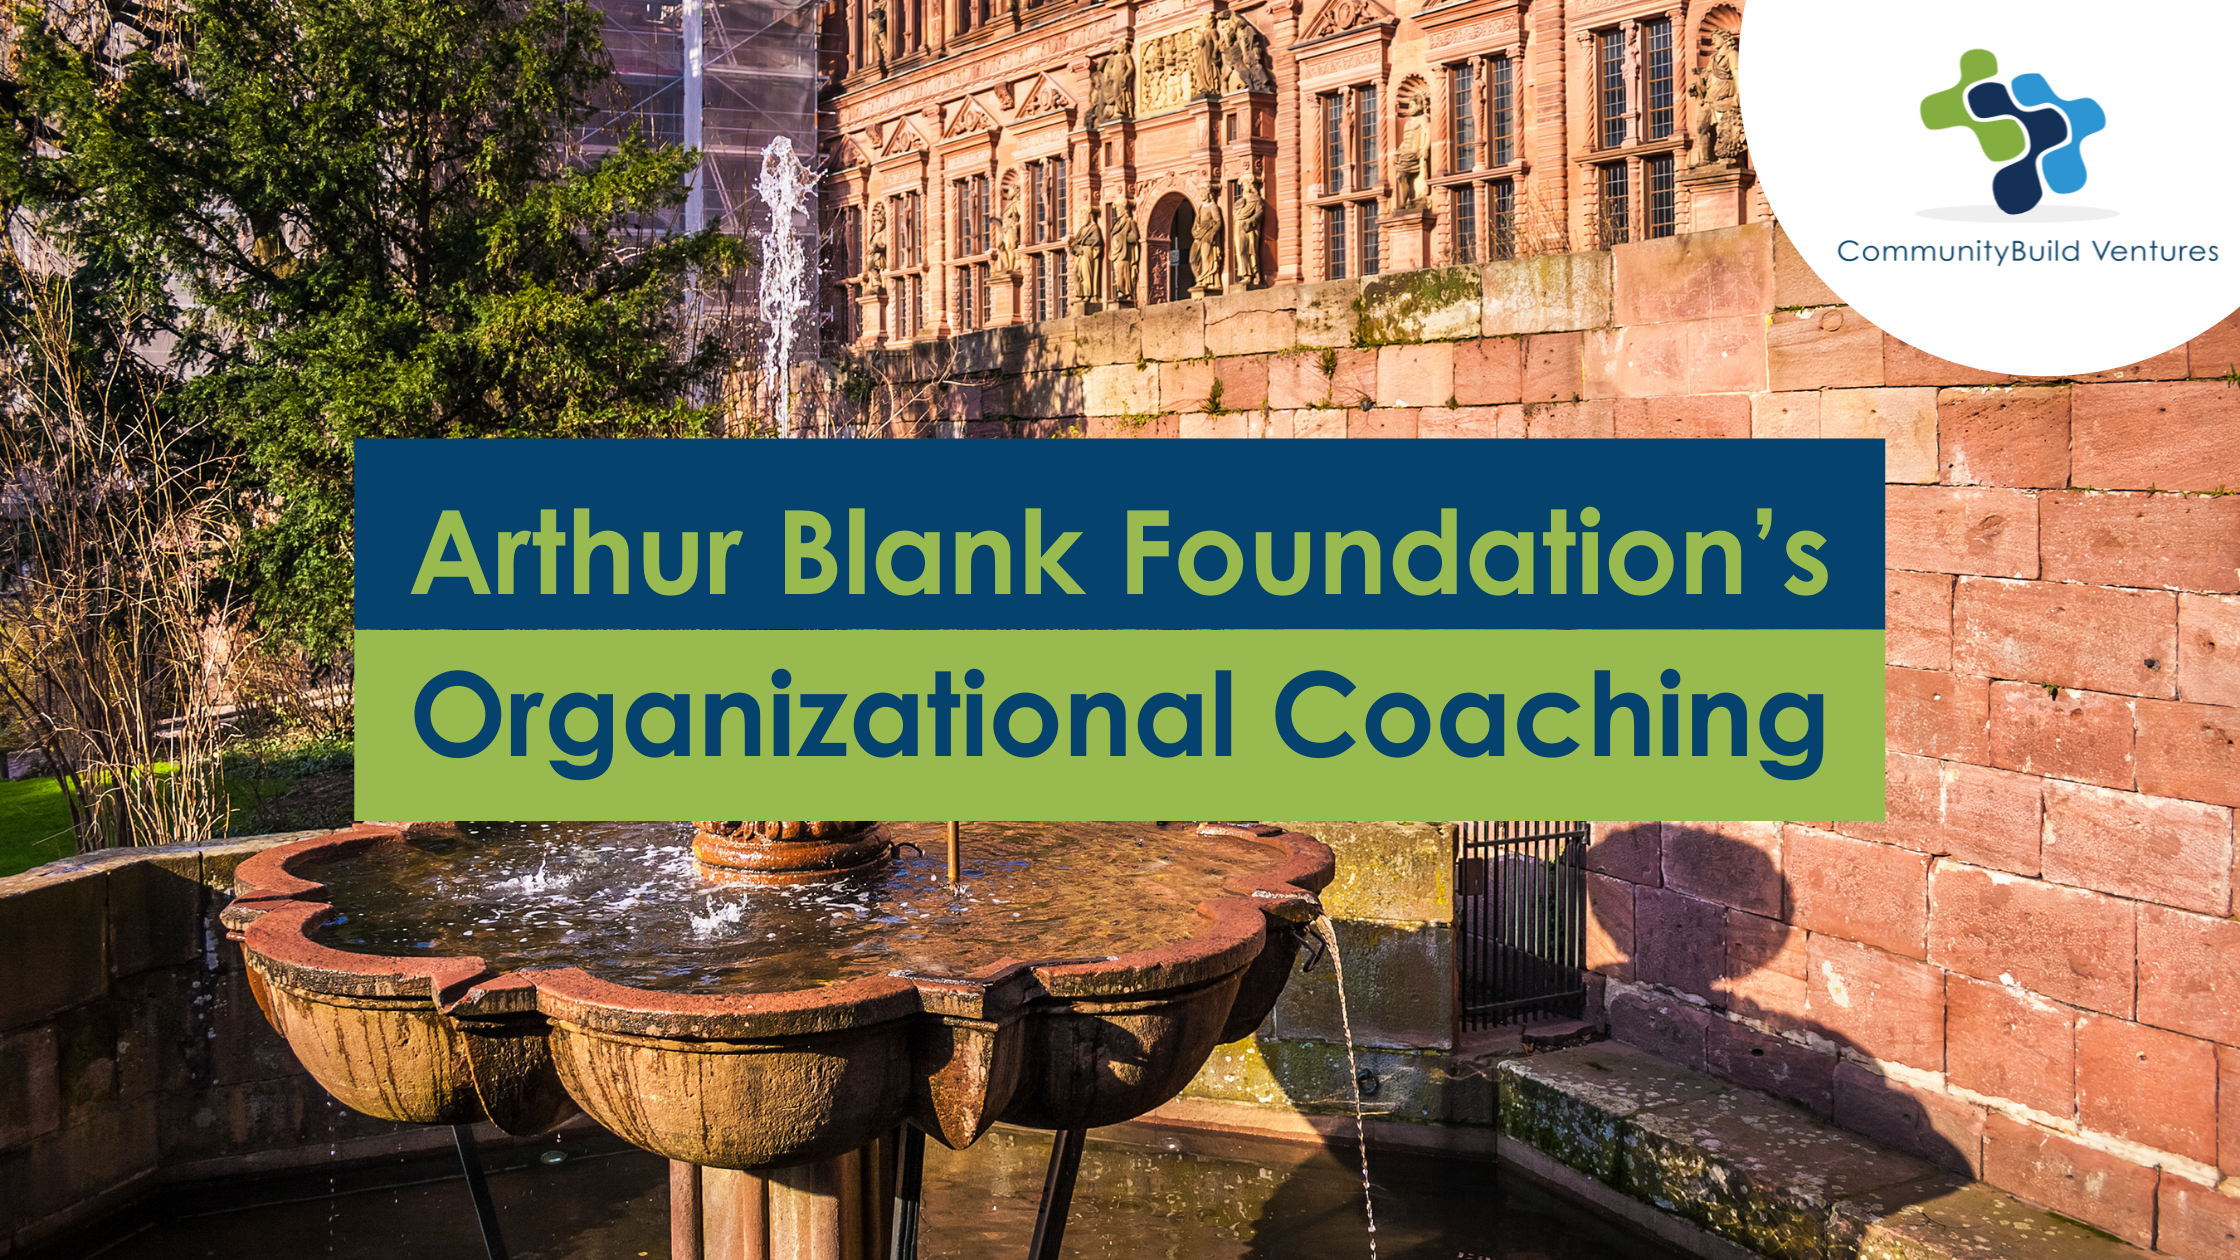 Arthur Blank Foundation’s Organizational Coaching